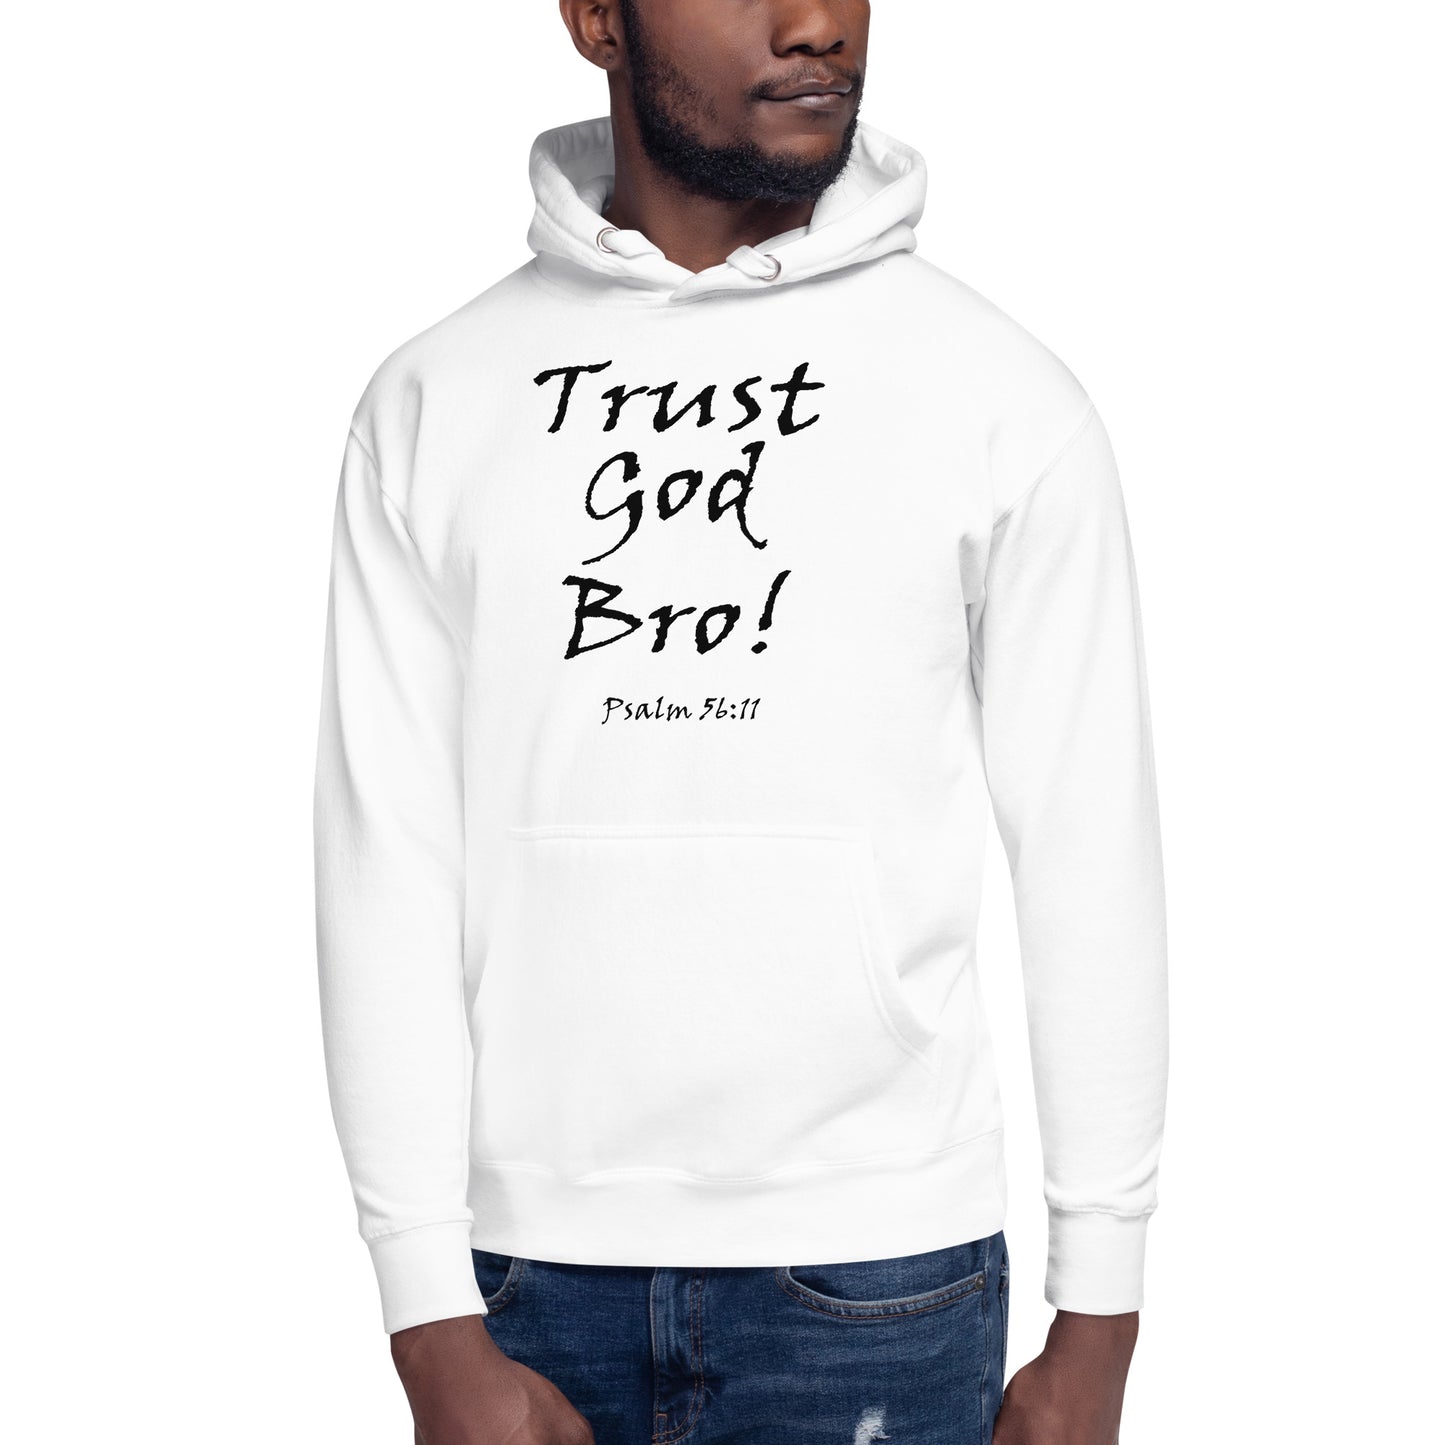 Trust God Bro! Unisex Hoodie - Solid Rock Designs | Christian Apparel